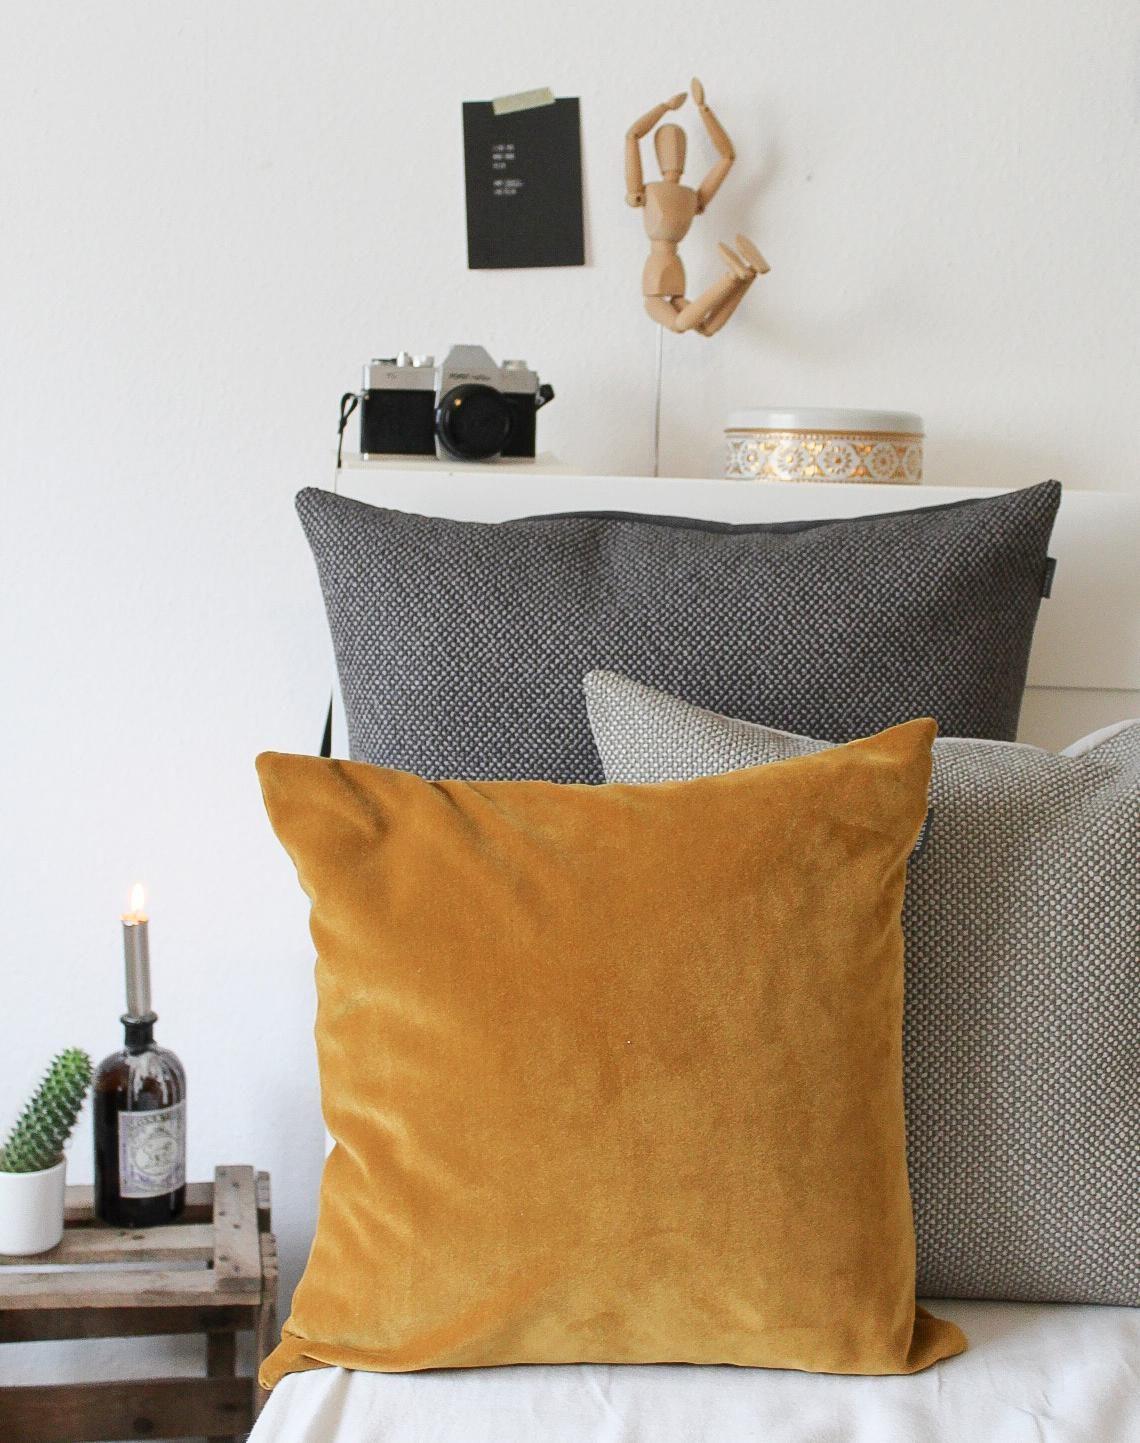 Cosy!
#interior #madeingermany #cushion #skandistyle #velvet #designmadeingermany #ilovedesign